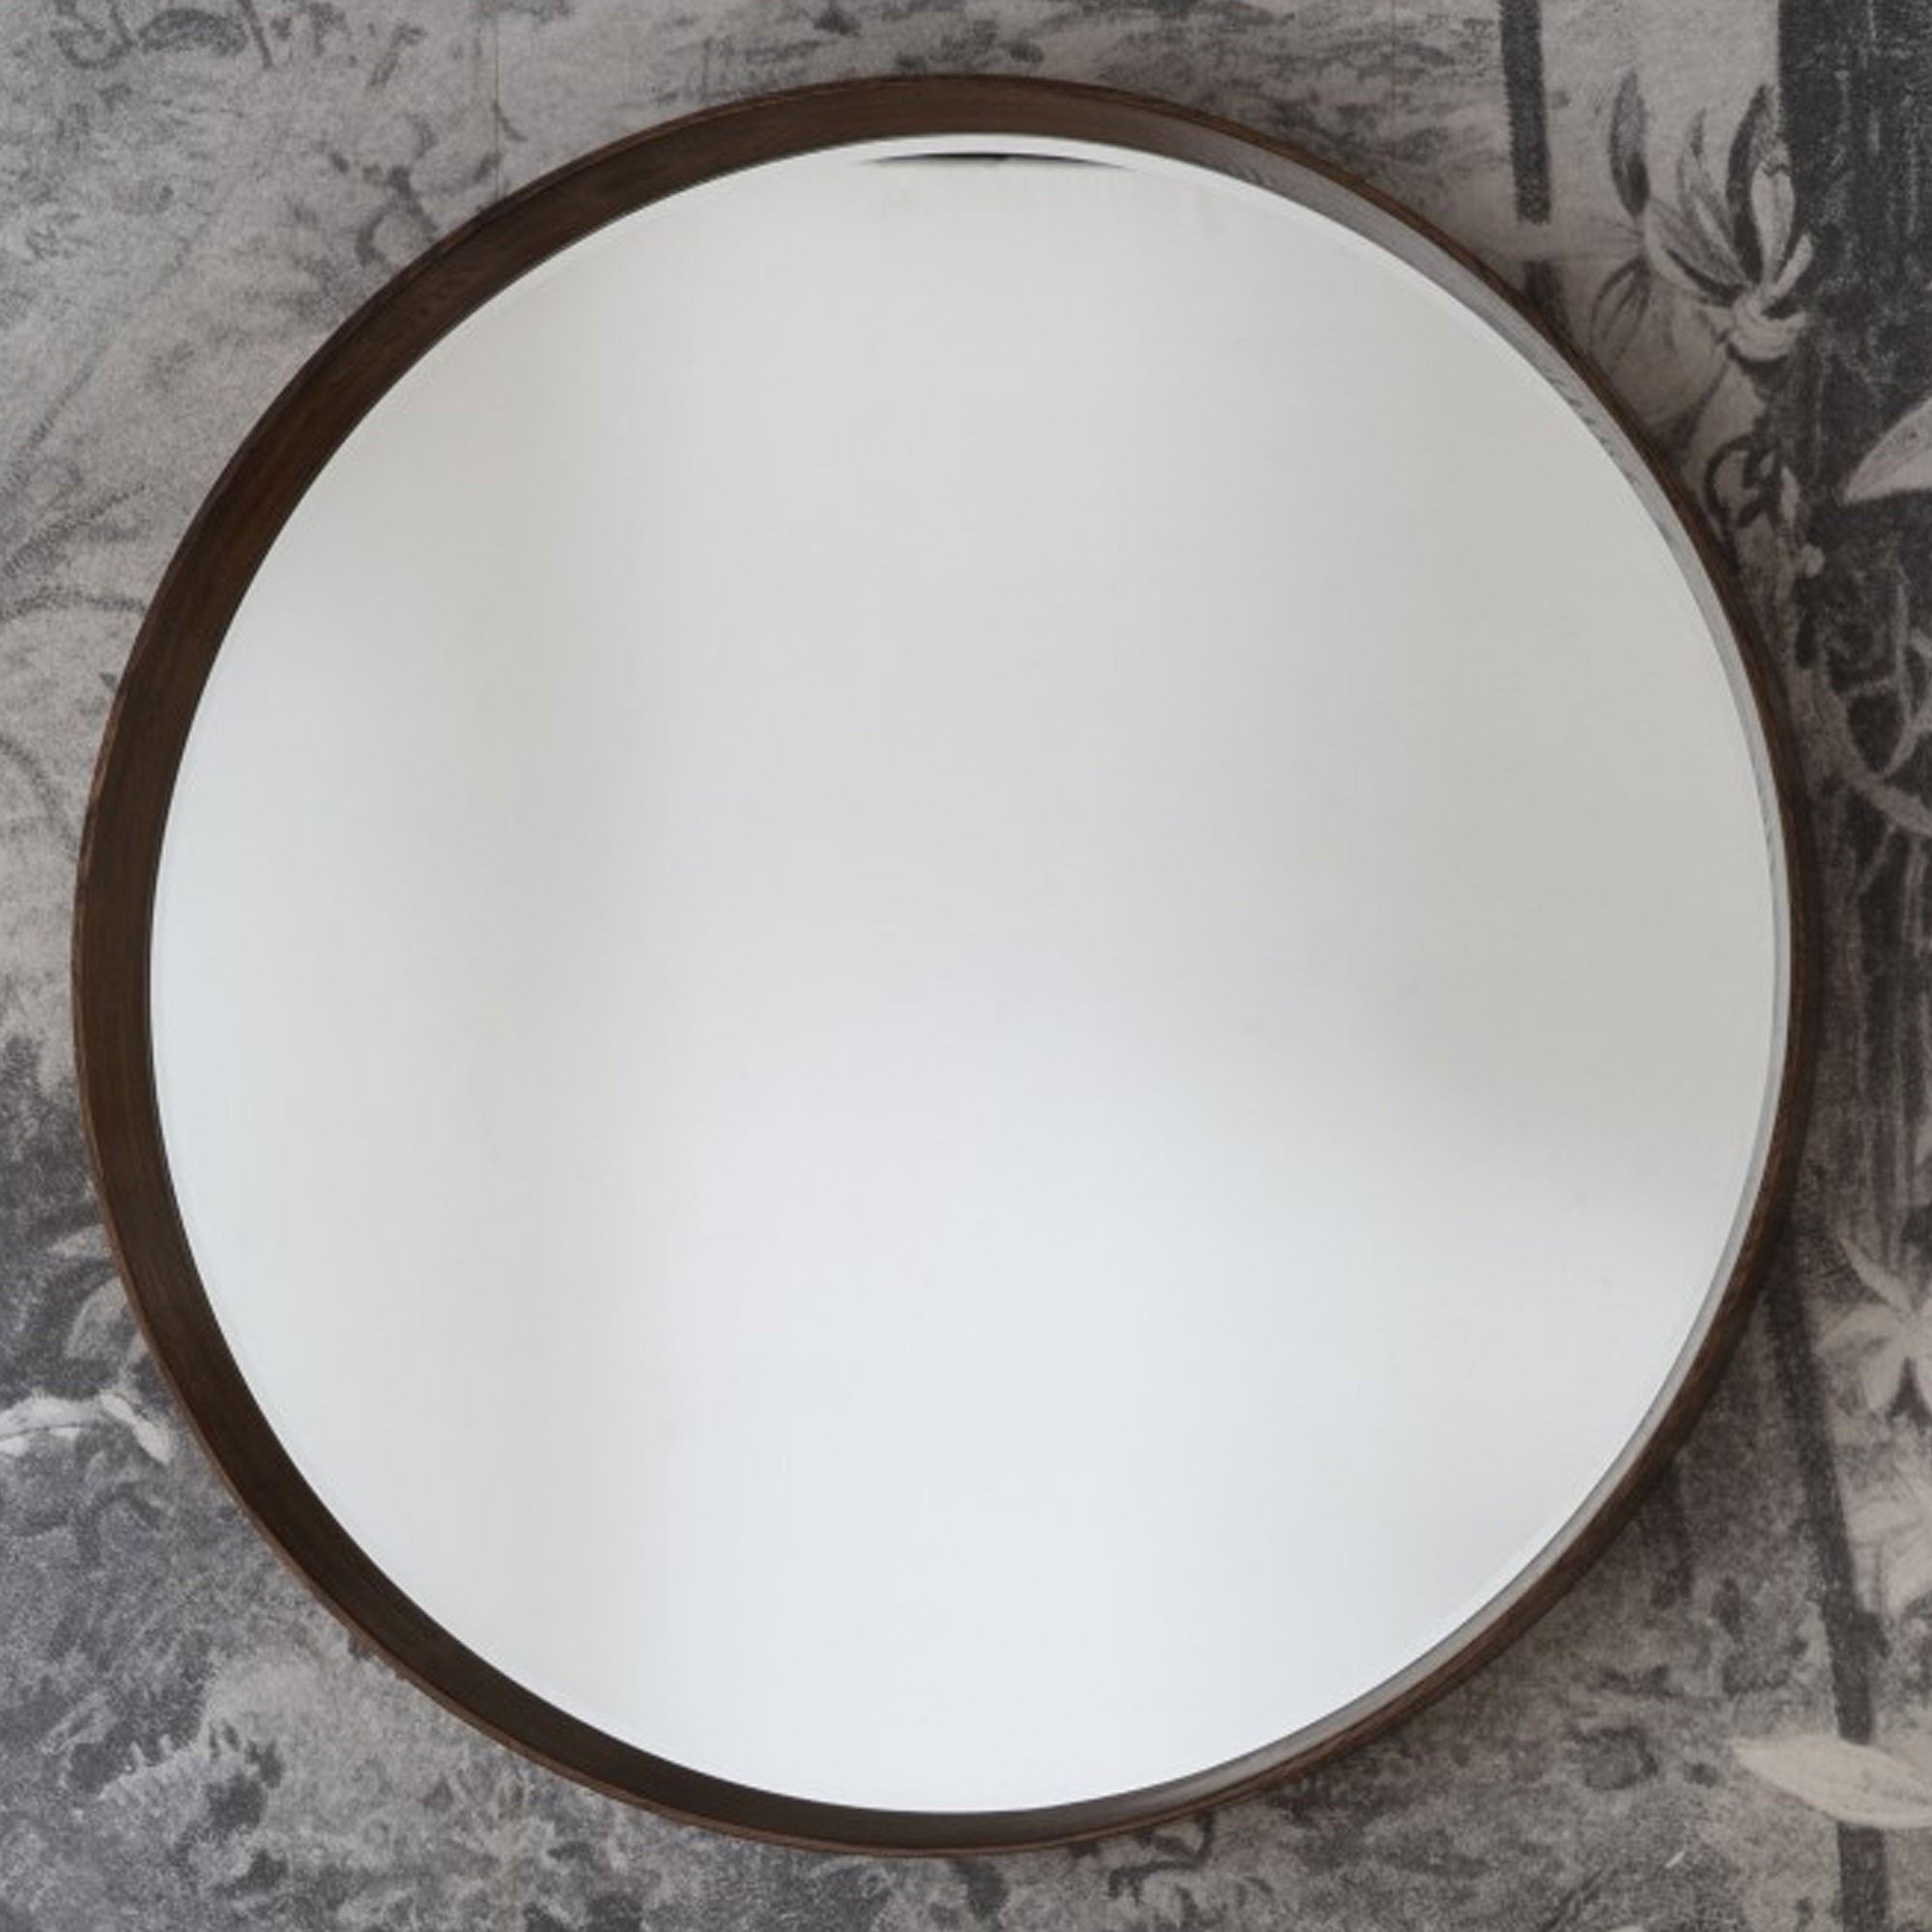 Keaton Round Mirror Walnut | Walnut Round Mirror | Round Mirror | Wall For Free Floating Printed Glass Round Wall Mirrors (View 10 of 15)